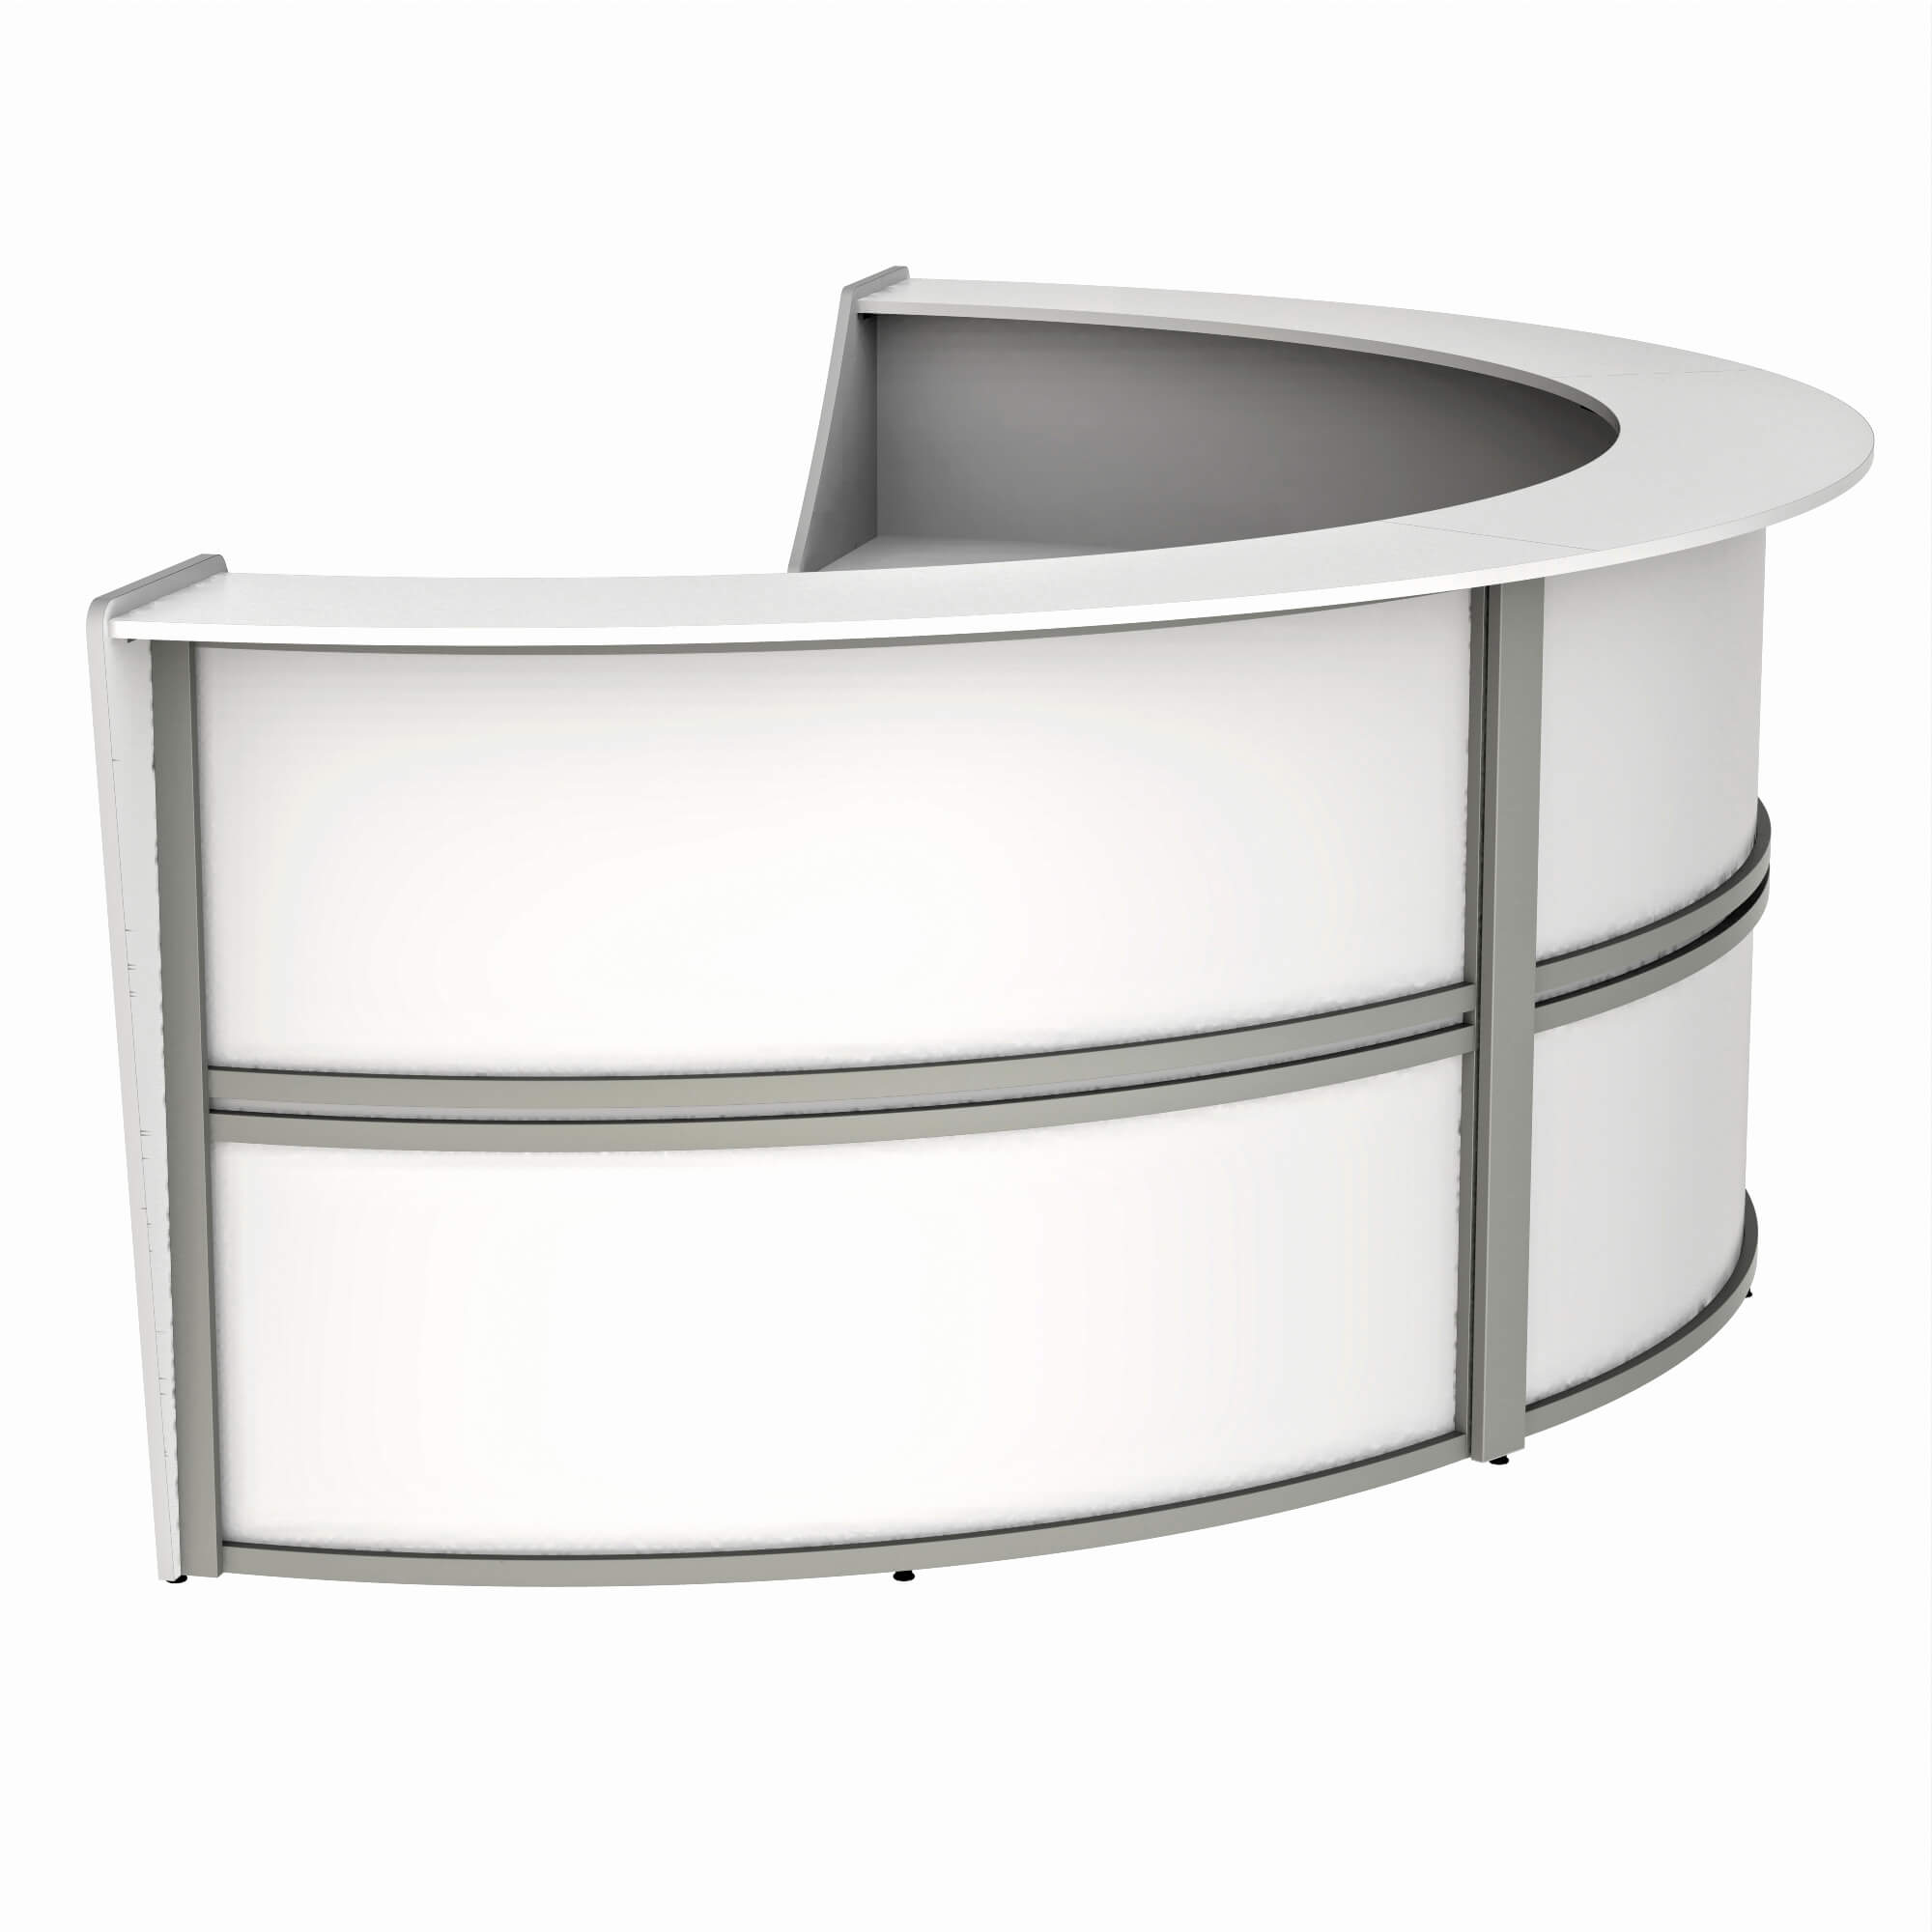 Li1 elegant semi circular reception desk lateral